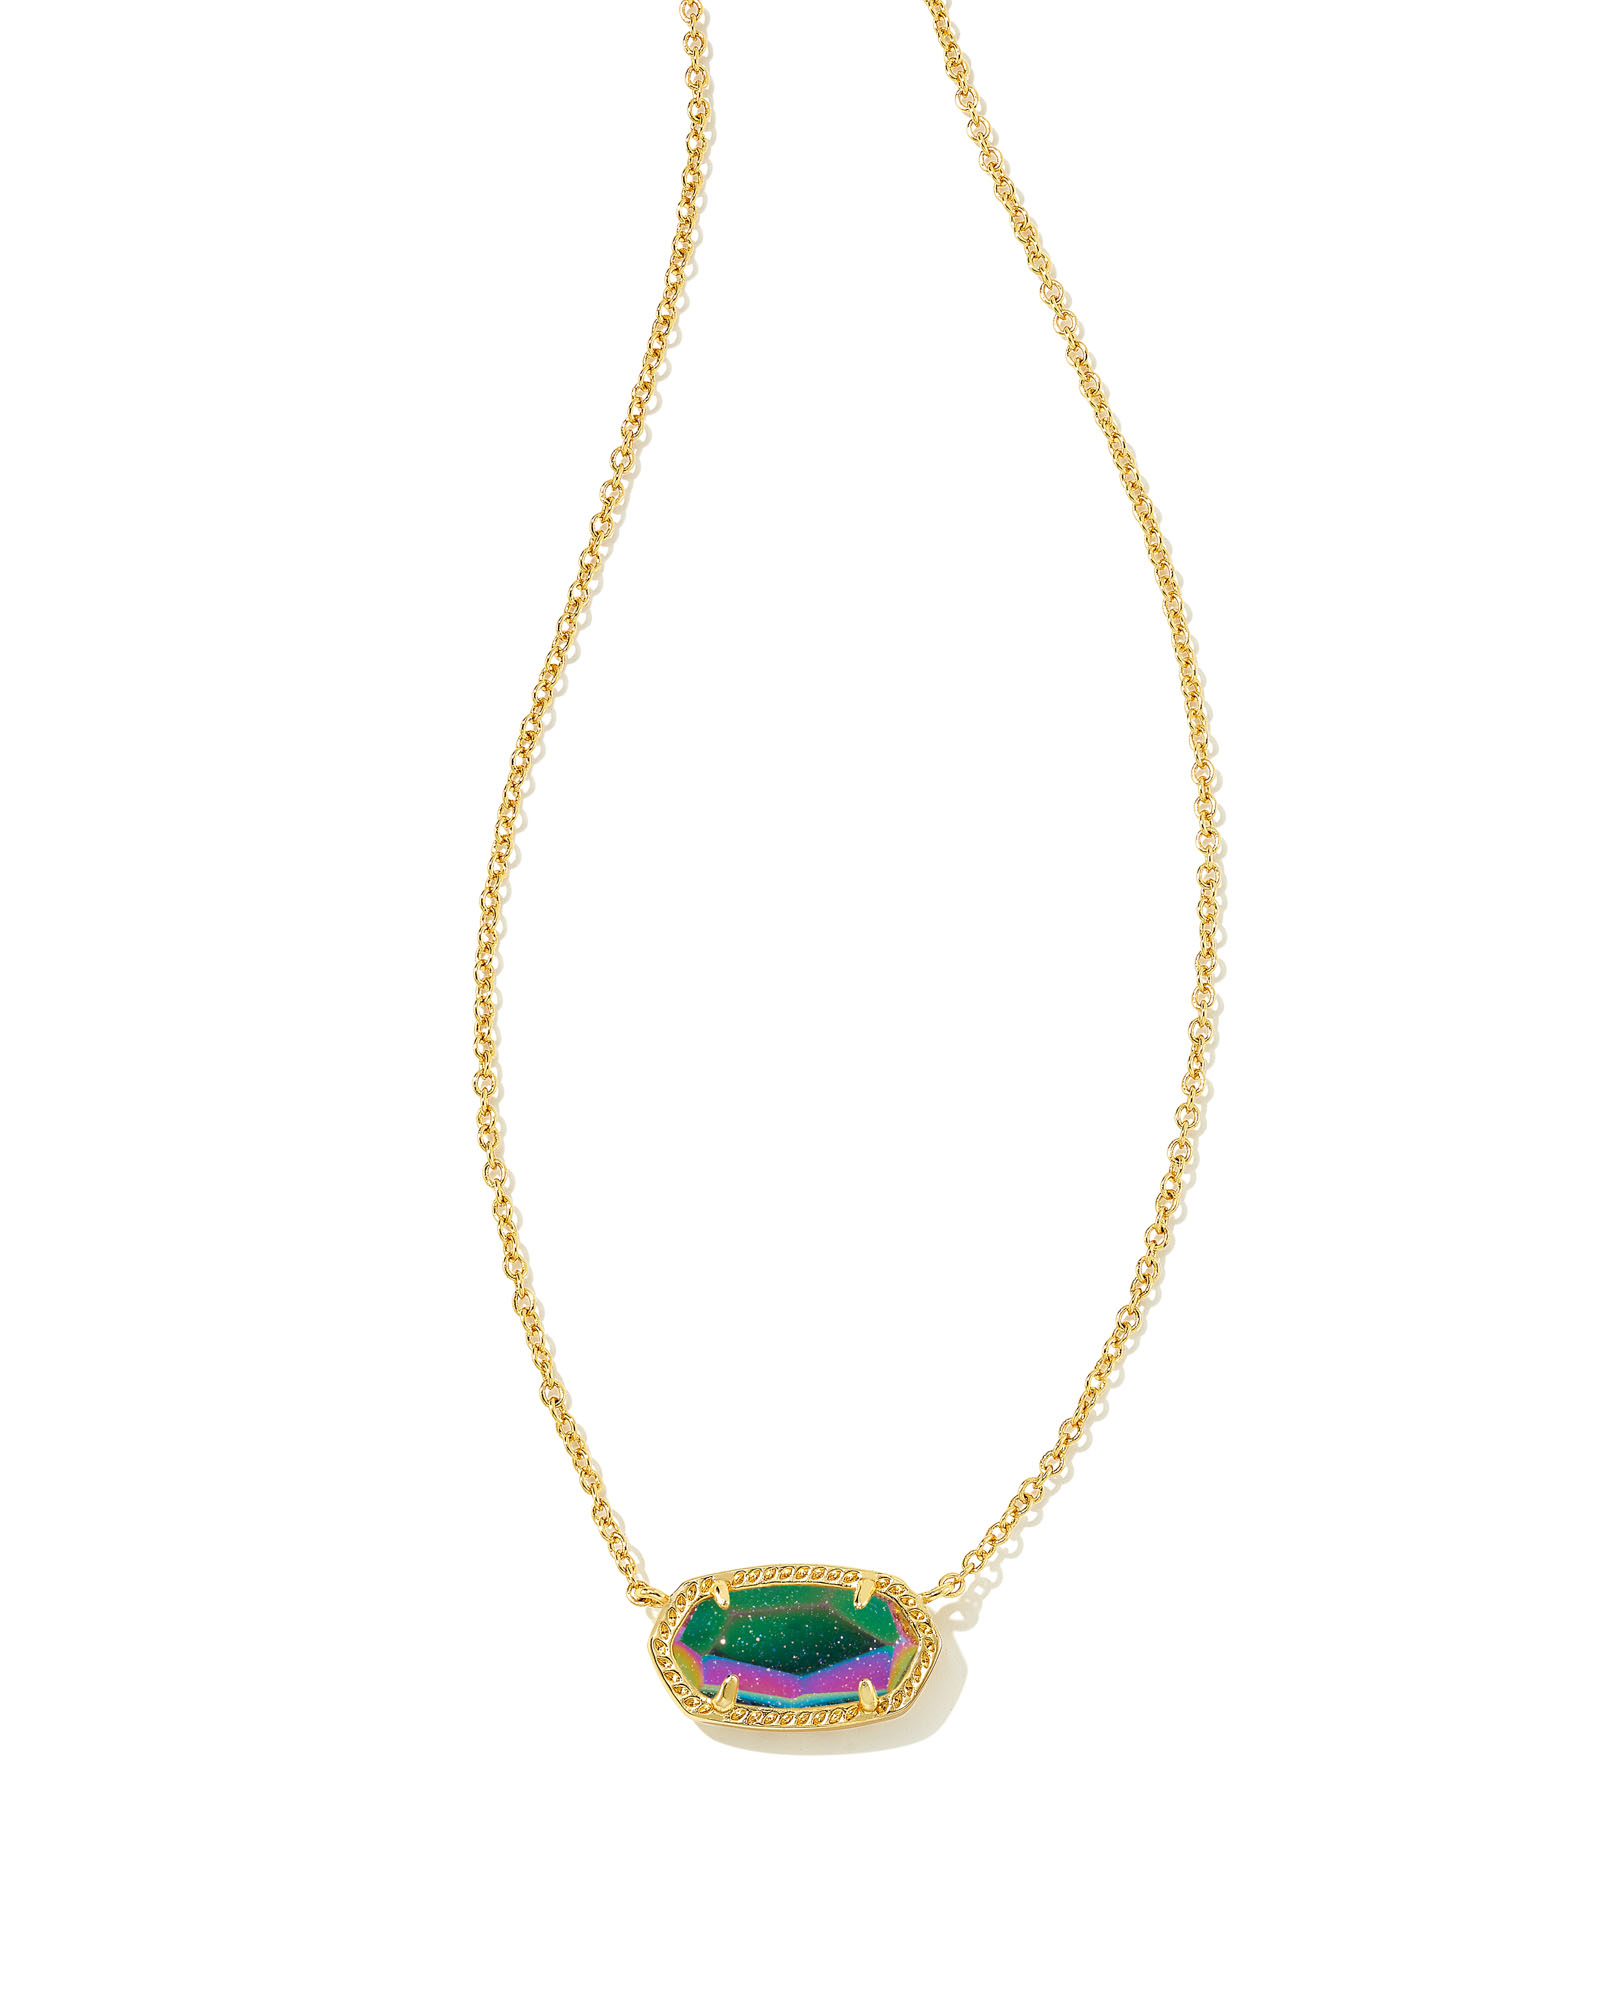 Elisa Gold Pendant Necklace in Iridescent Blue Goldstone | Kendra Scott